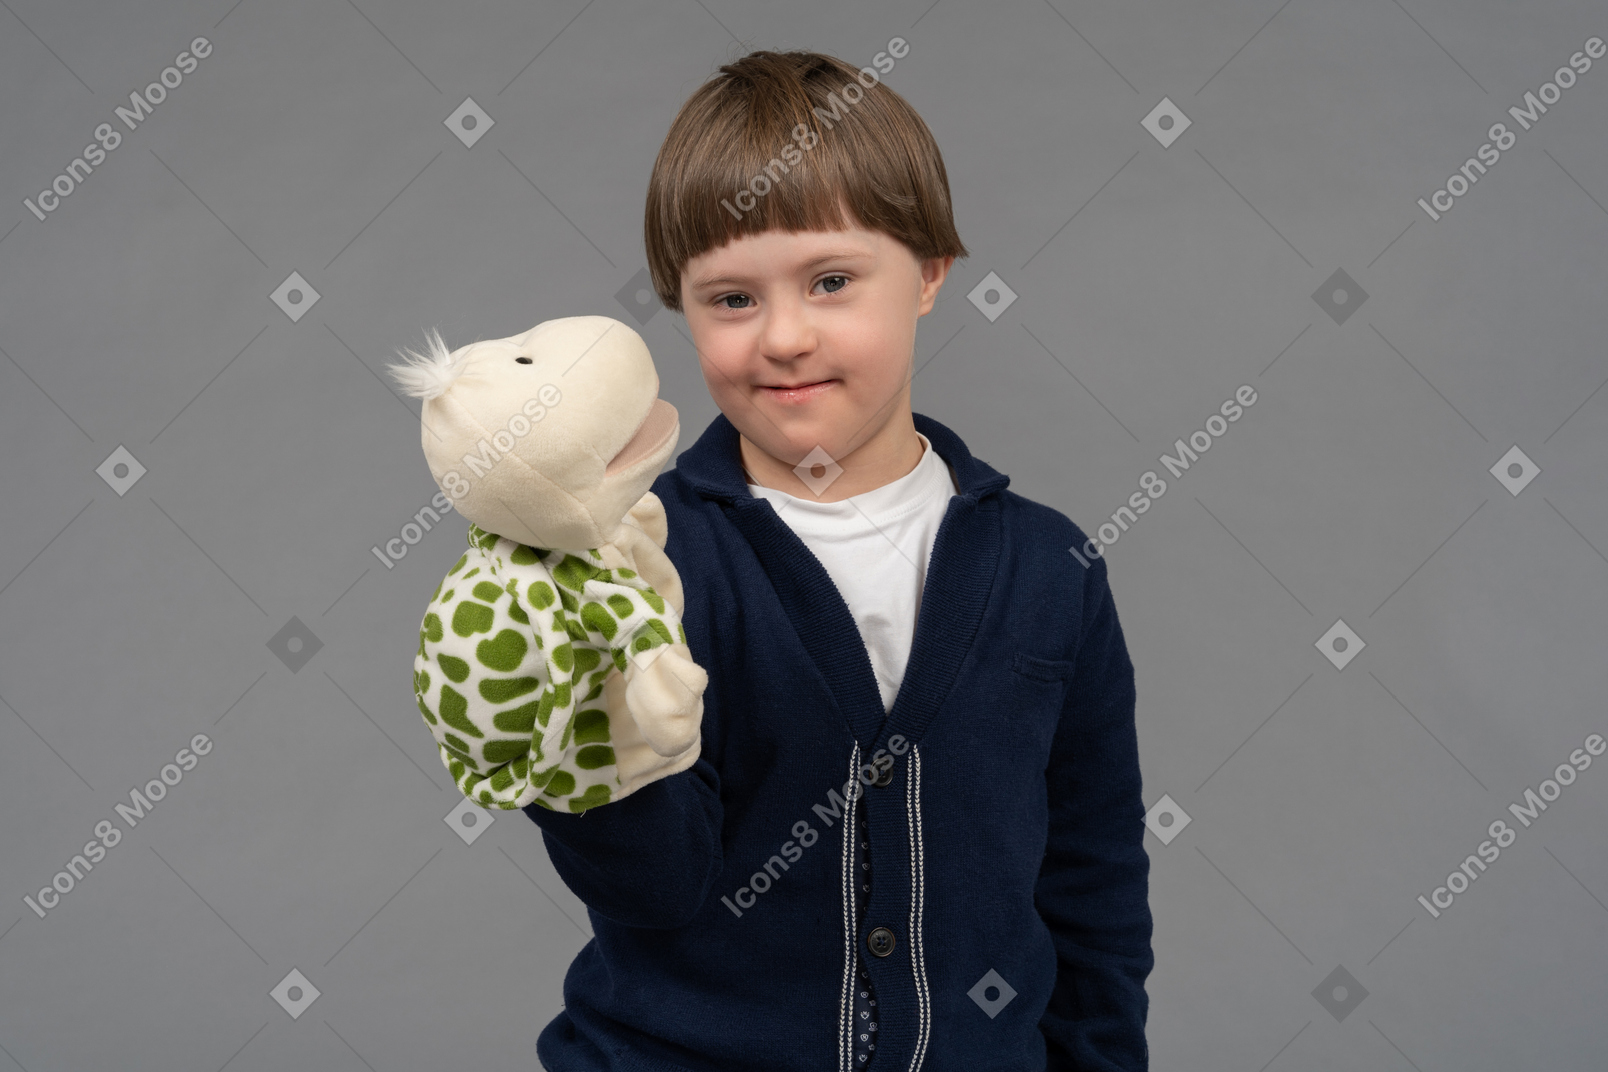 Portrait of a little boy holding a tortoise puppet